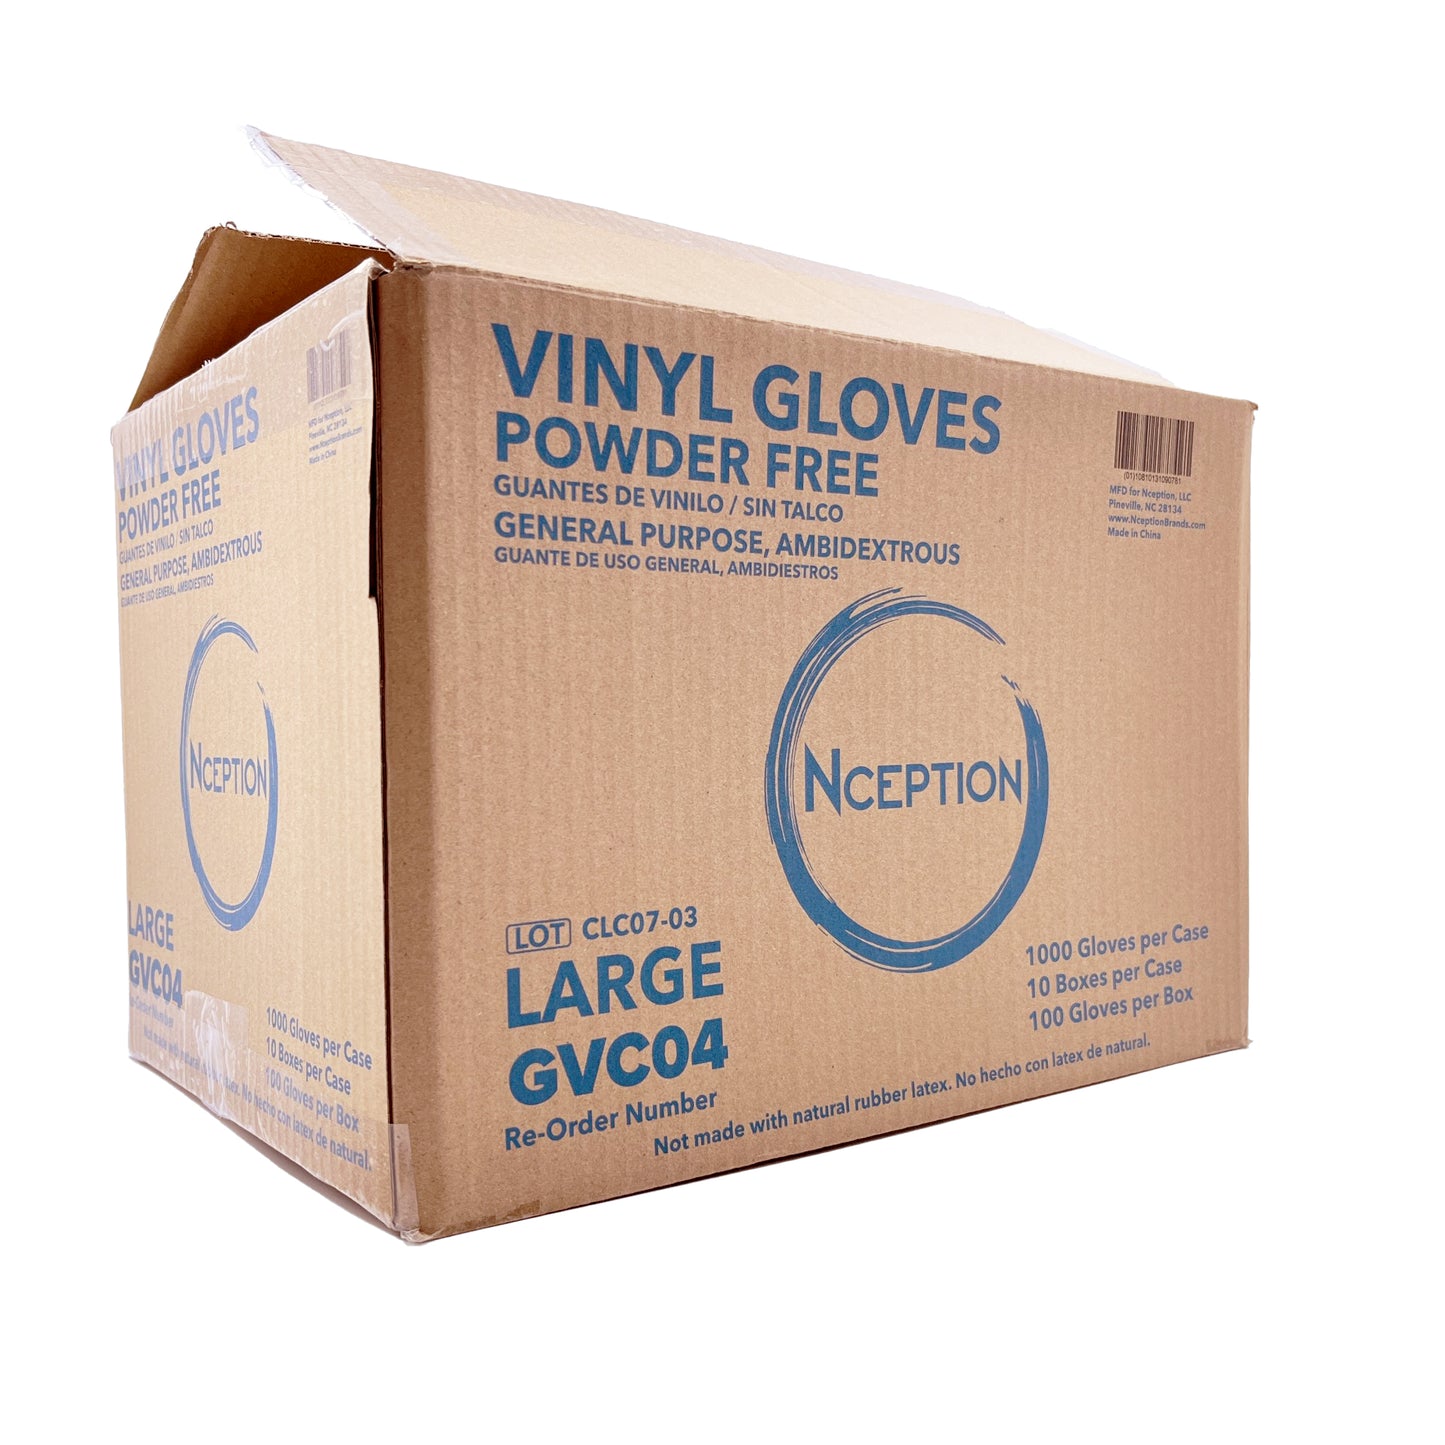 General Purpose Clear Vinyl Gloves - Powder Free